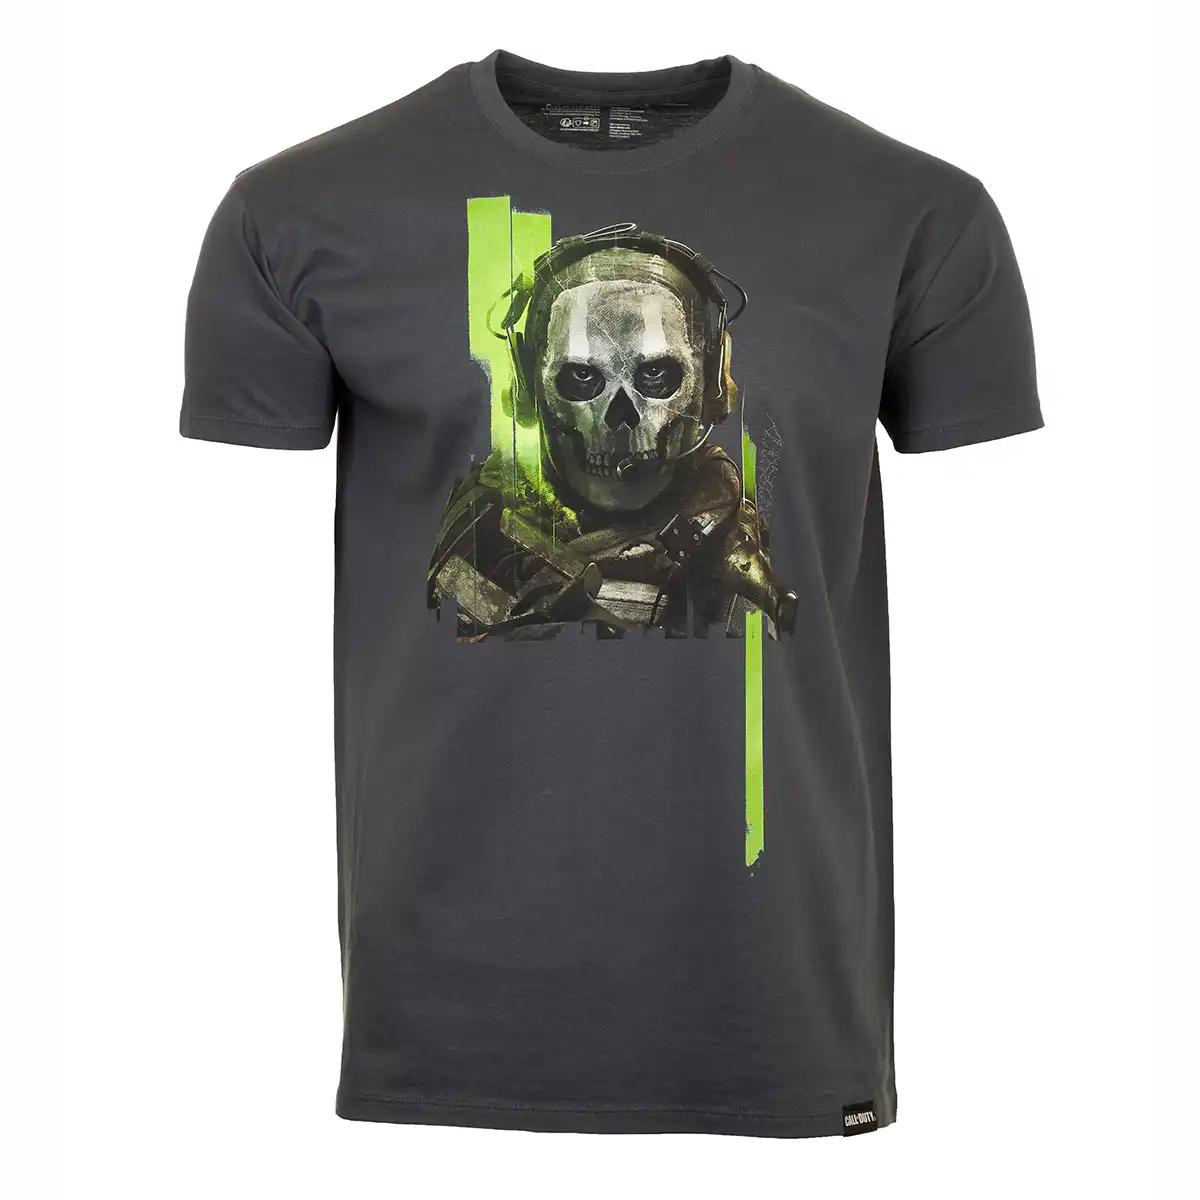 Call of Duty T-Shirt "Simon Riley" Dark Grey XXL